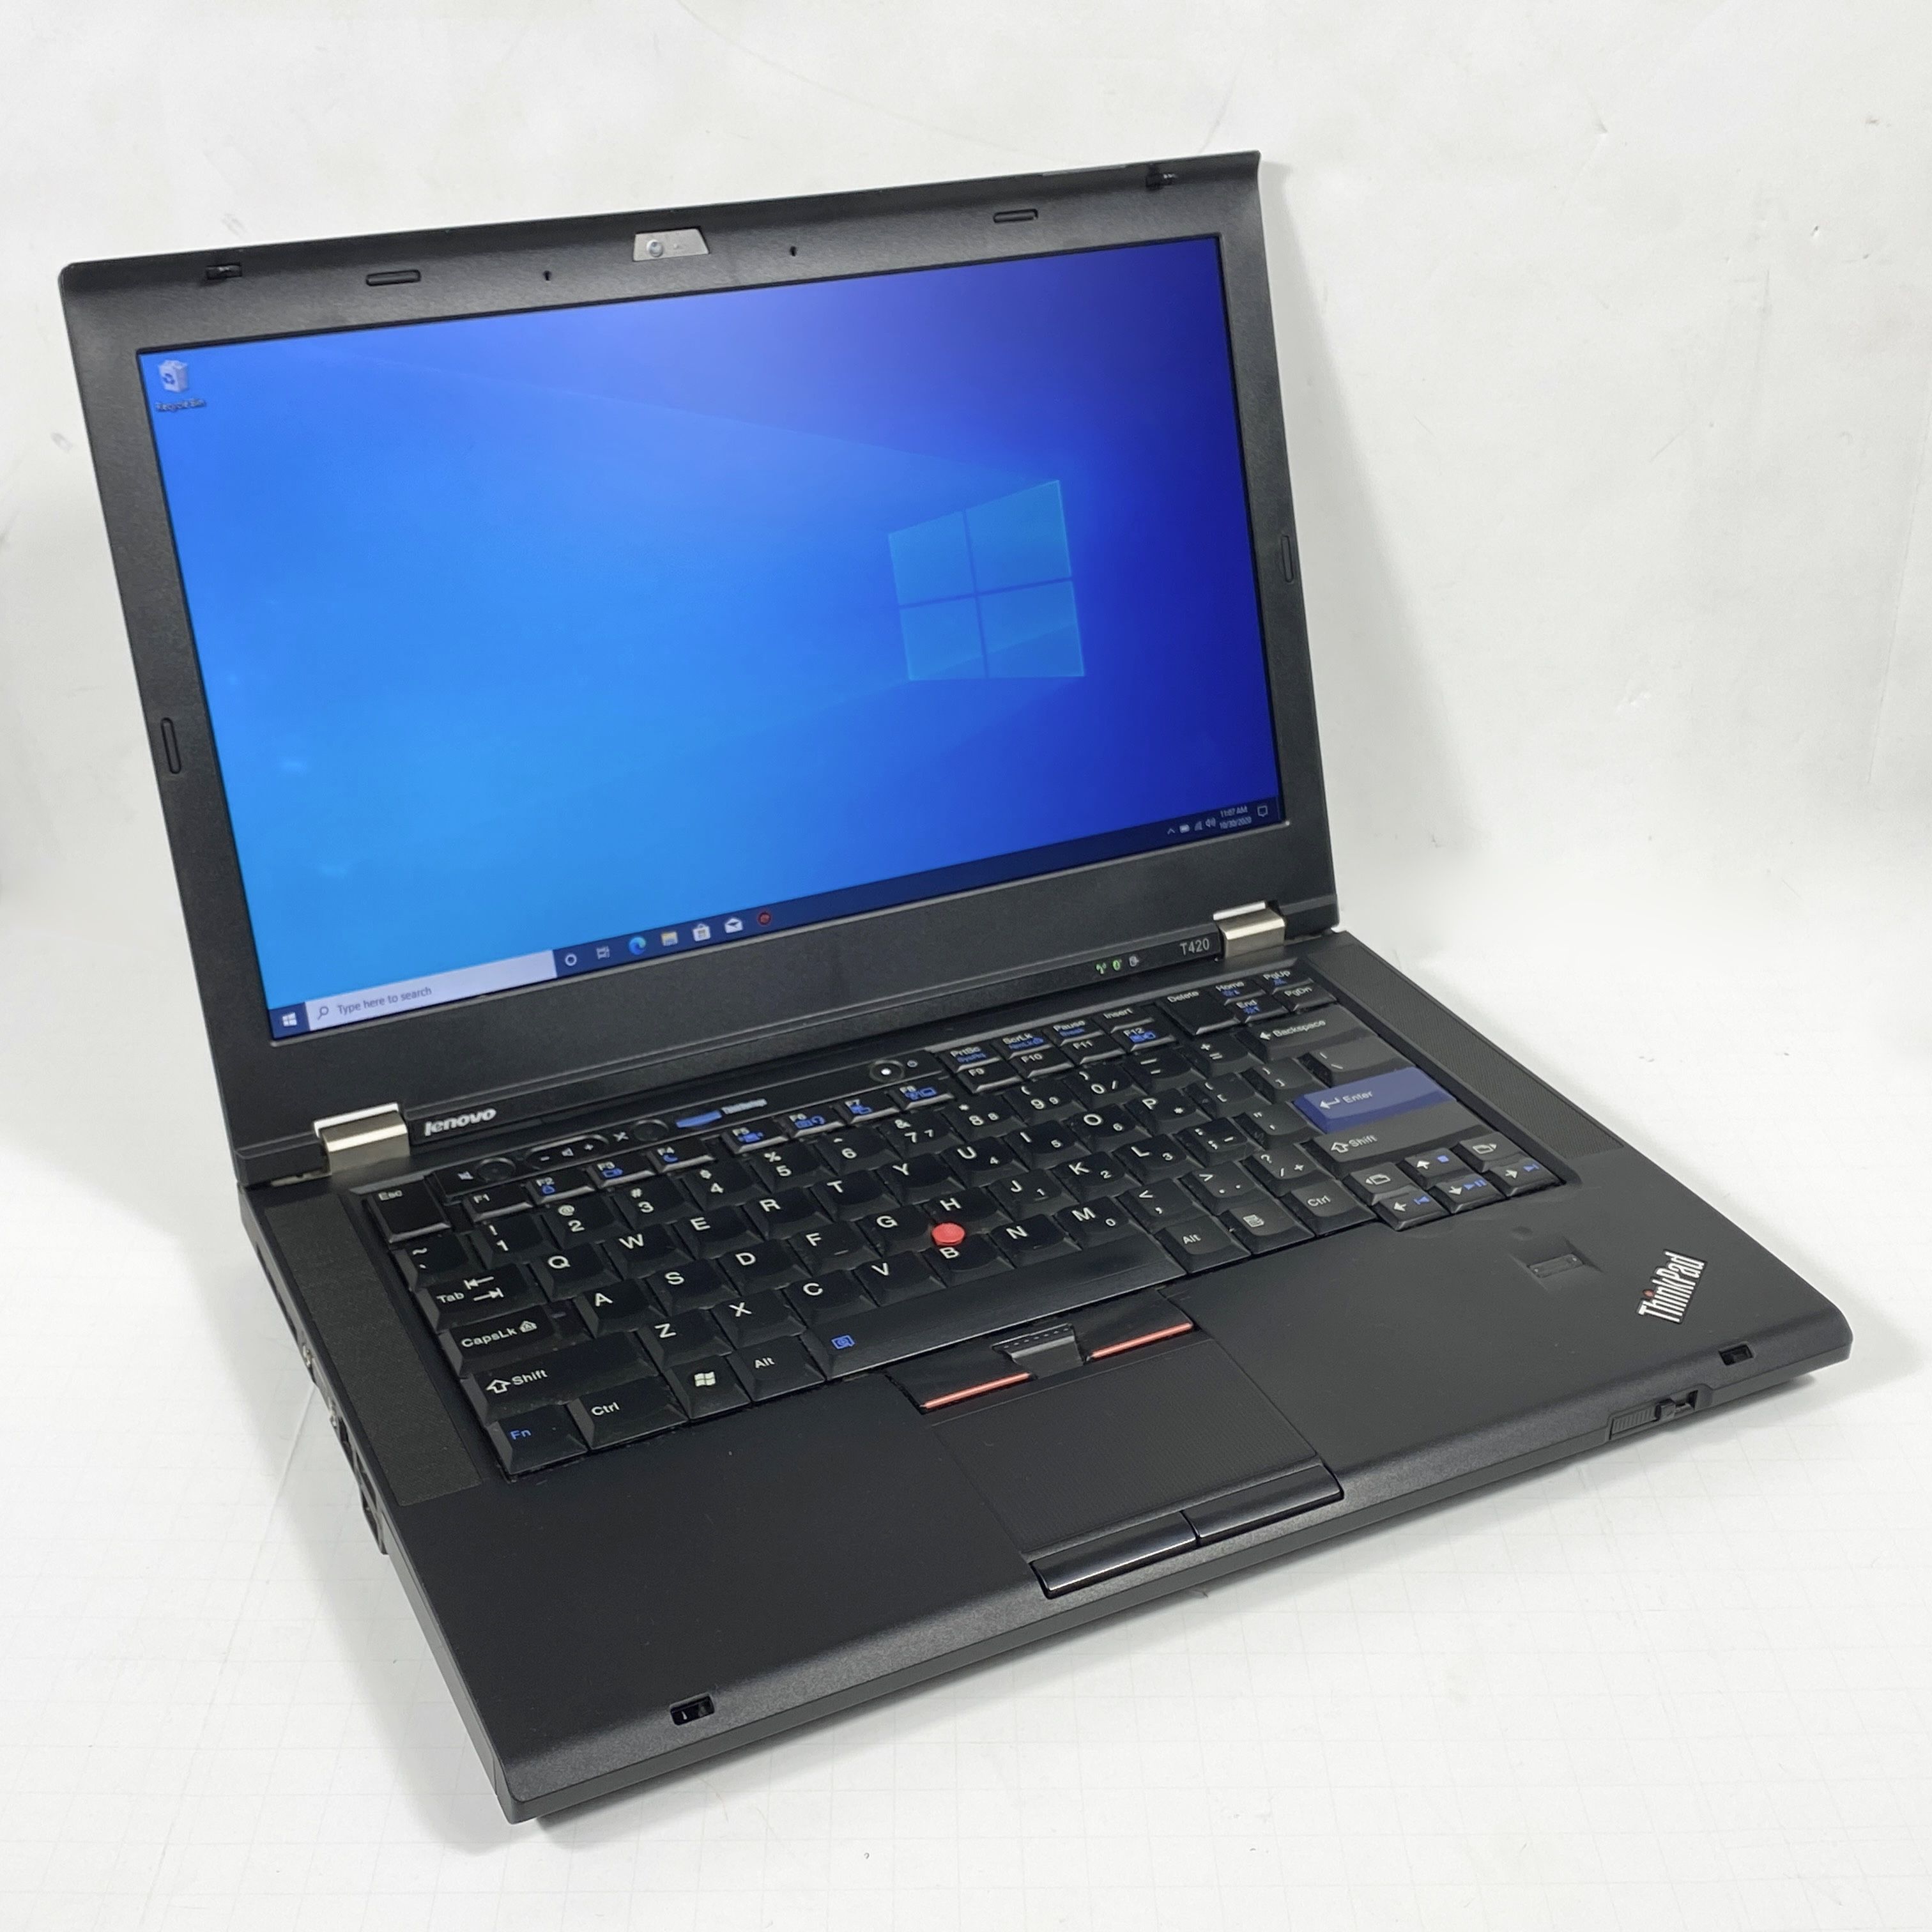 Lenovo ThinkPad T420 - Core i7, 128GB SSD, 1TB HDD, Windows 10 Pro